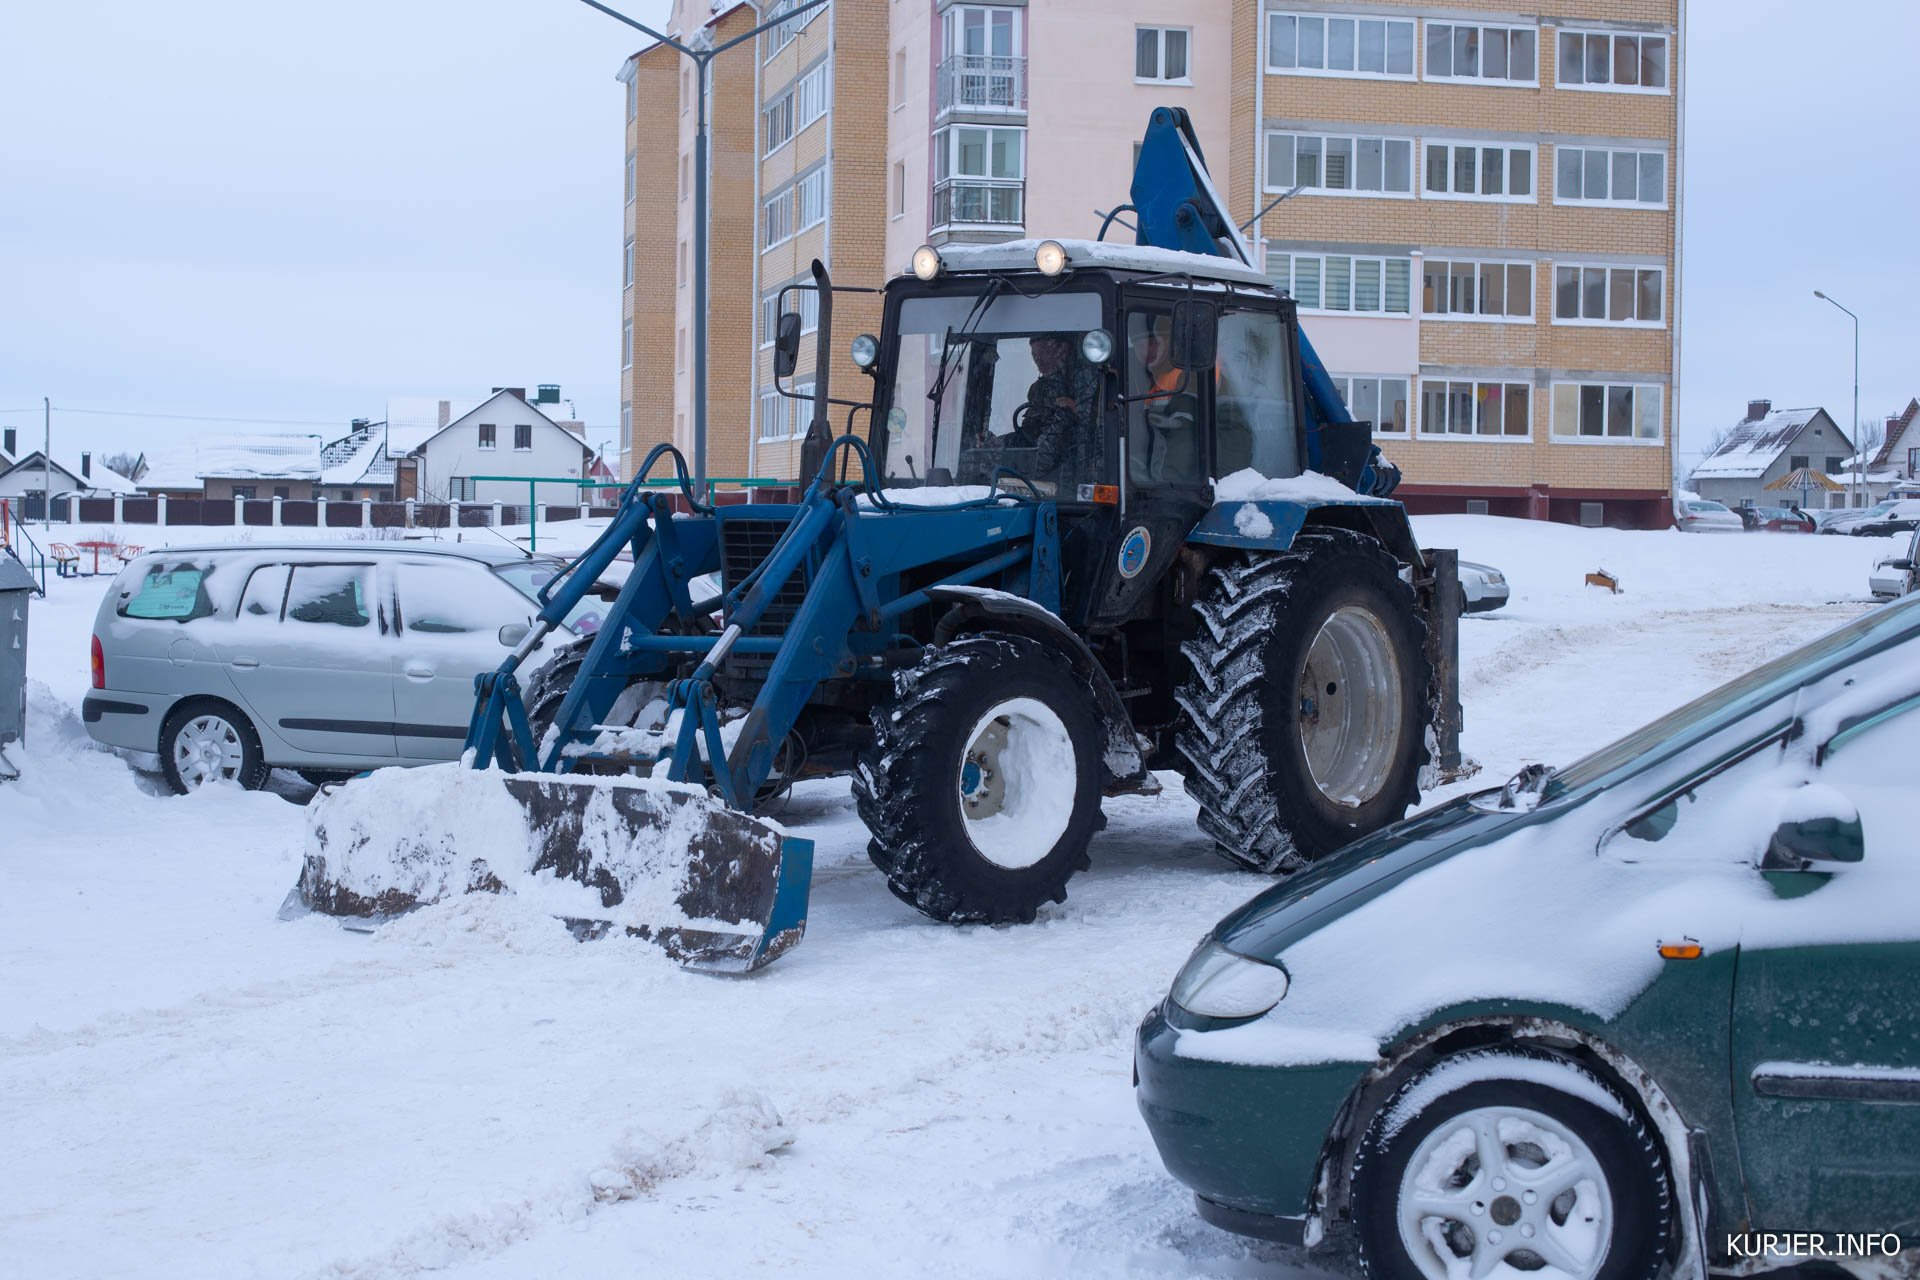 Трактора чистят дороги. Трактор МТЗ 82 убирает снег. Трактор МТЗ убирает снег. Трактор для чистки дорог от снега. Уборка снега трактором во дворе.